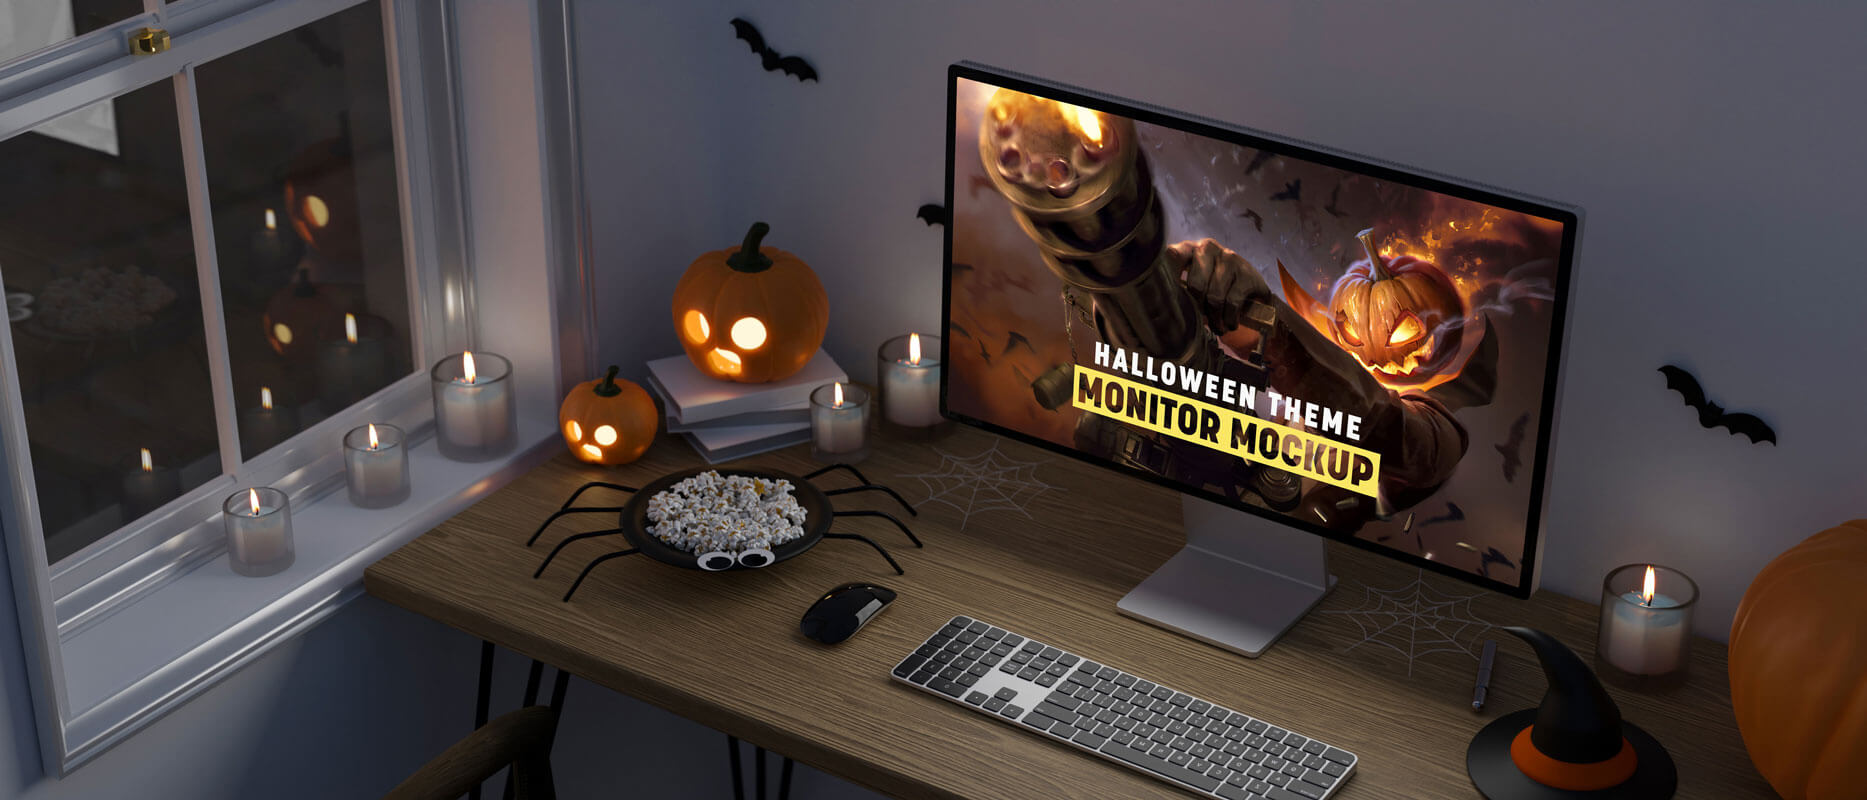 Free-Halloween-Theme-Monitor-Mockup-PSD